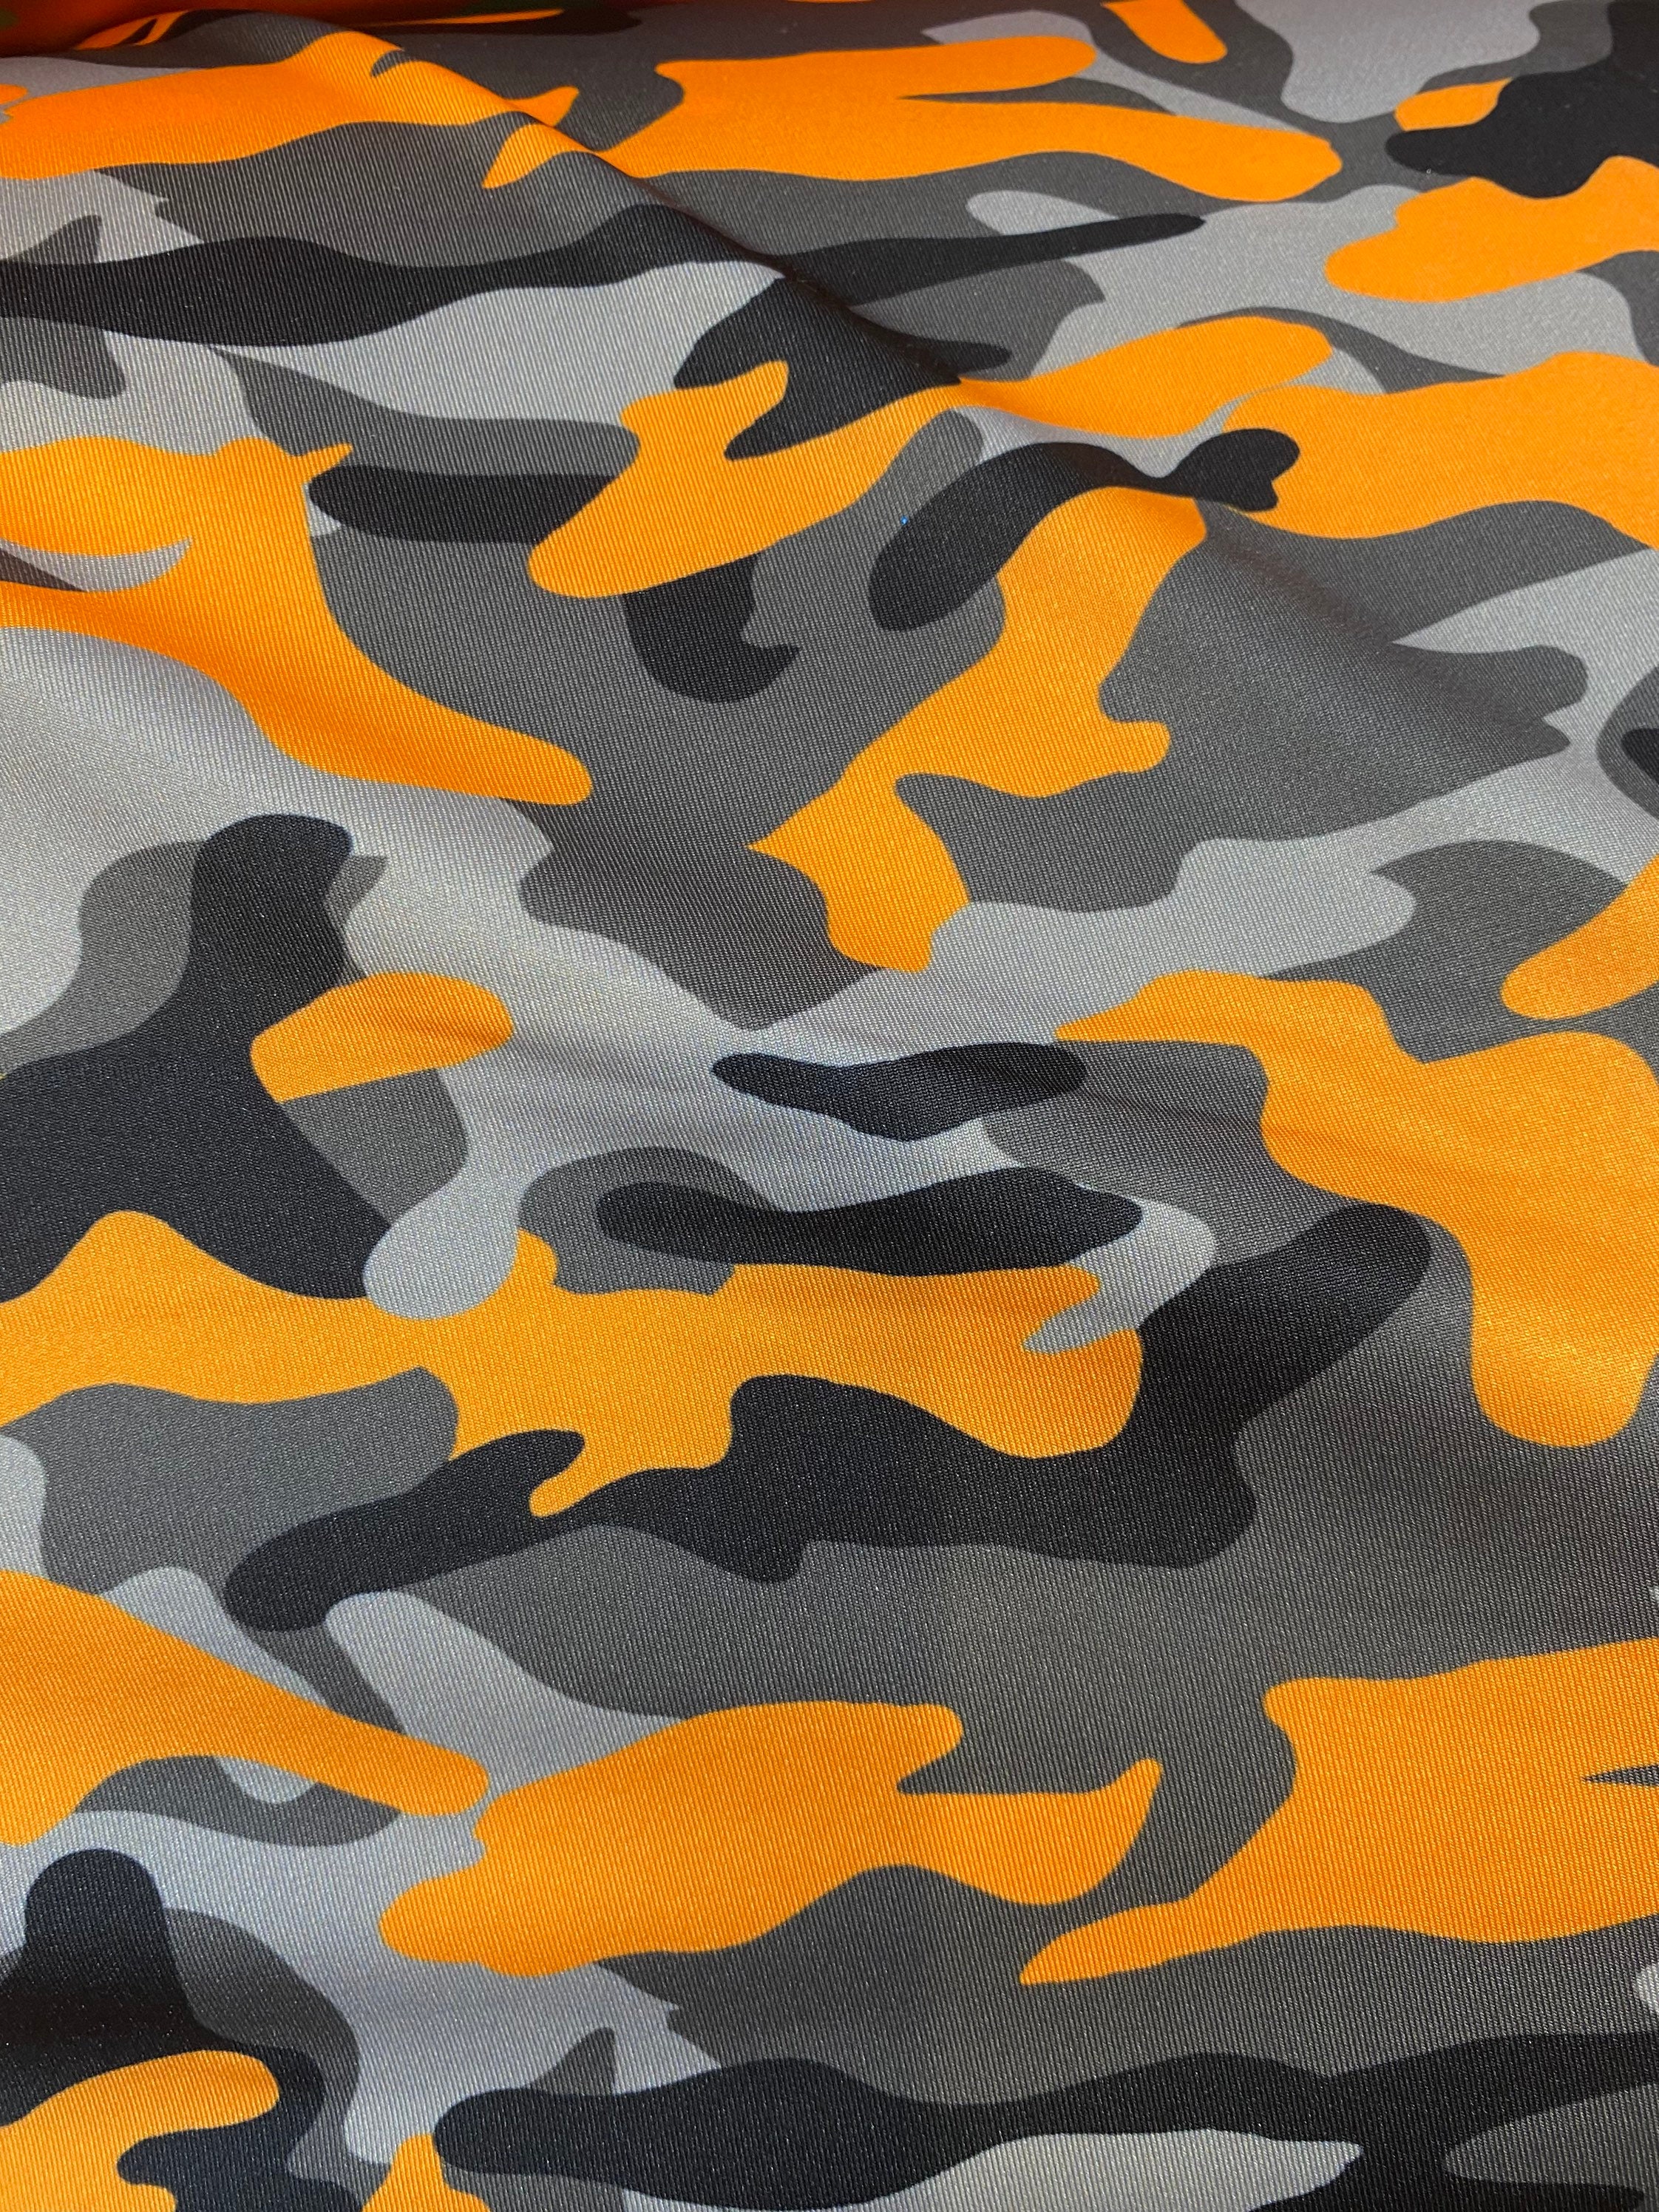 New Orange/black/gray Camouflage Print on Great Quality Nylon